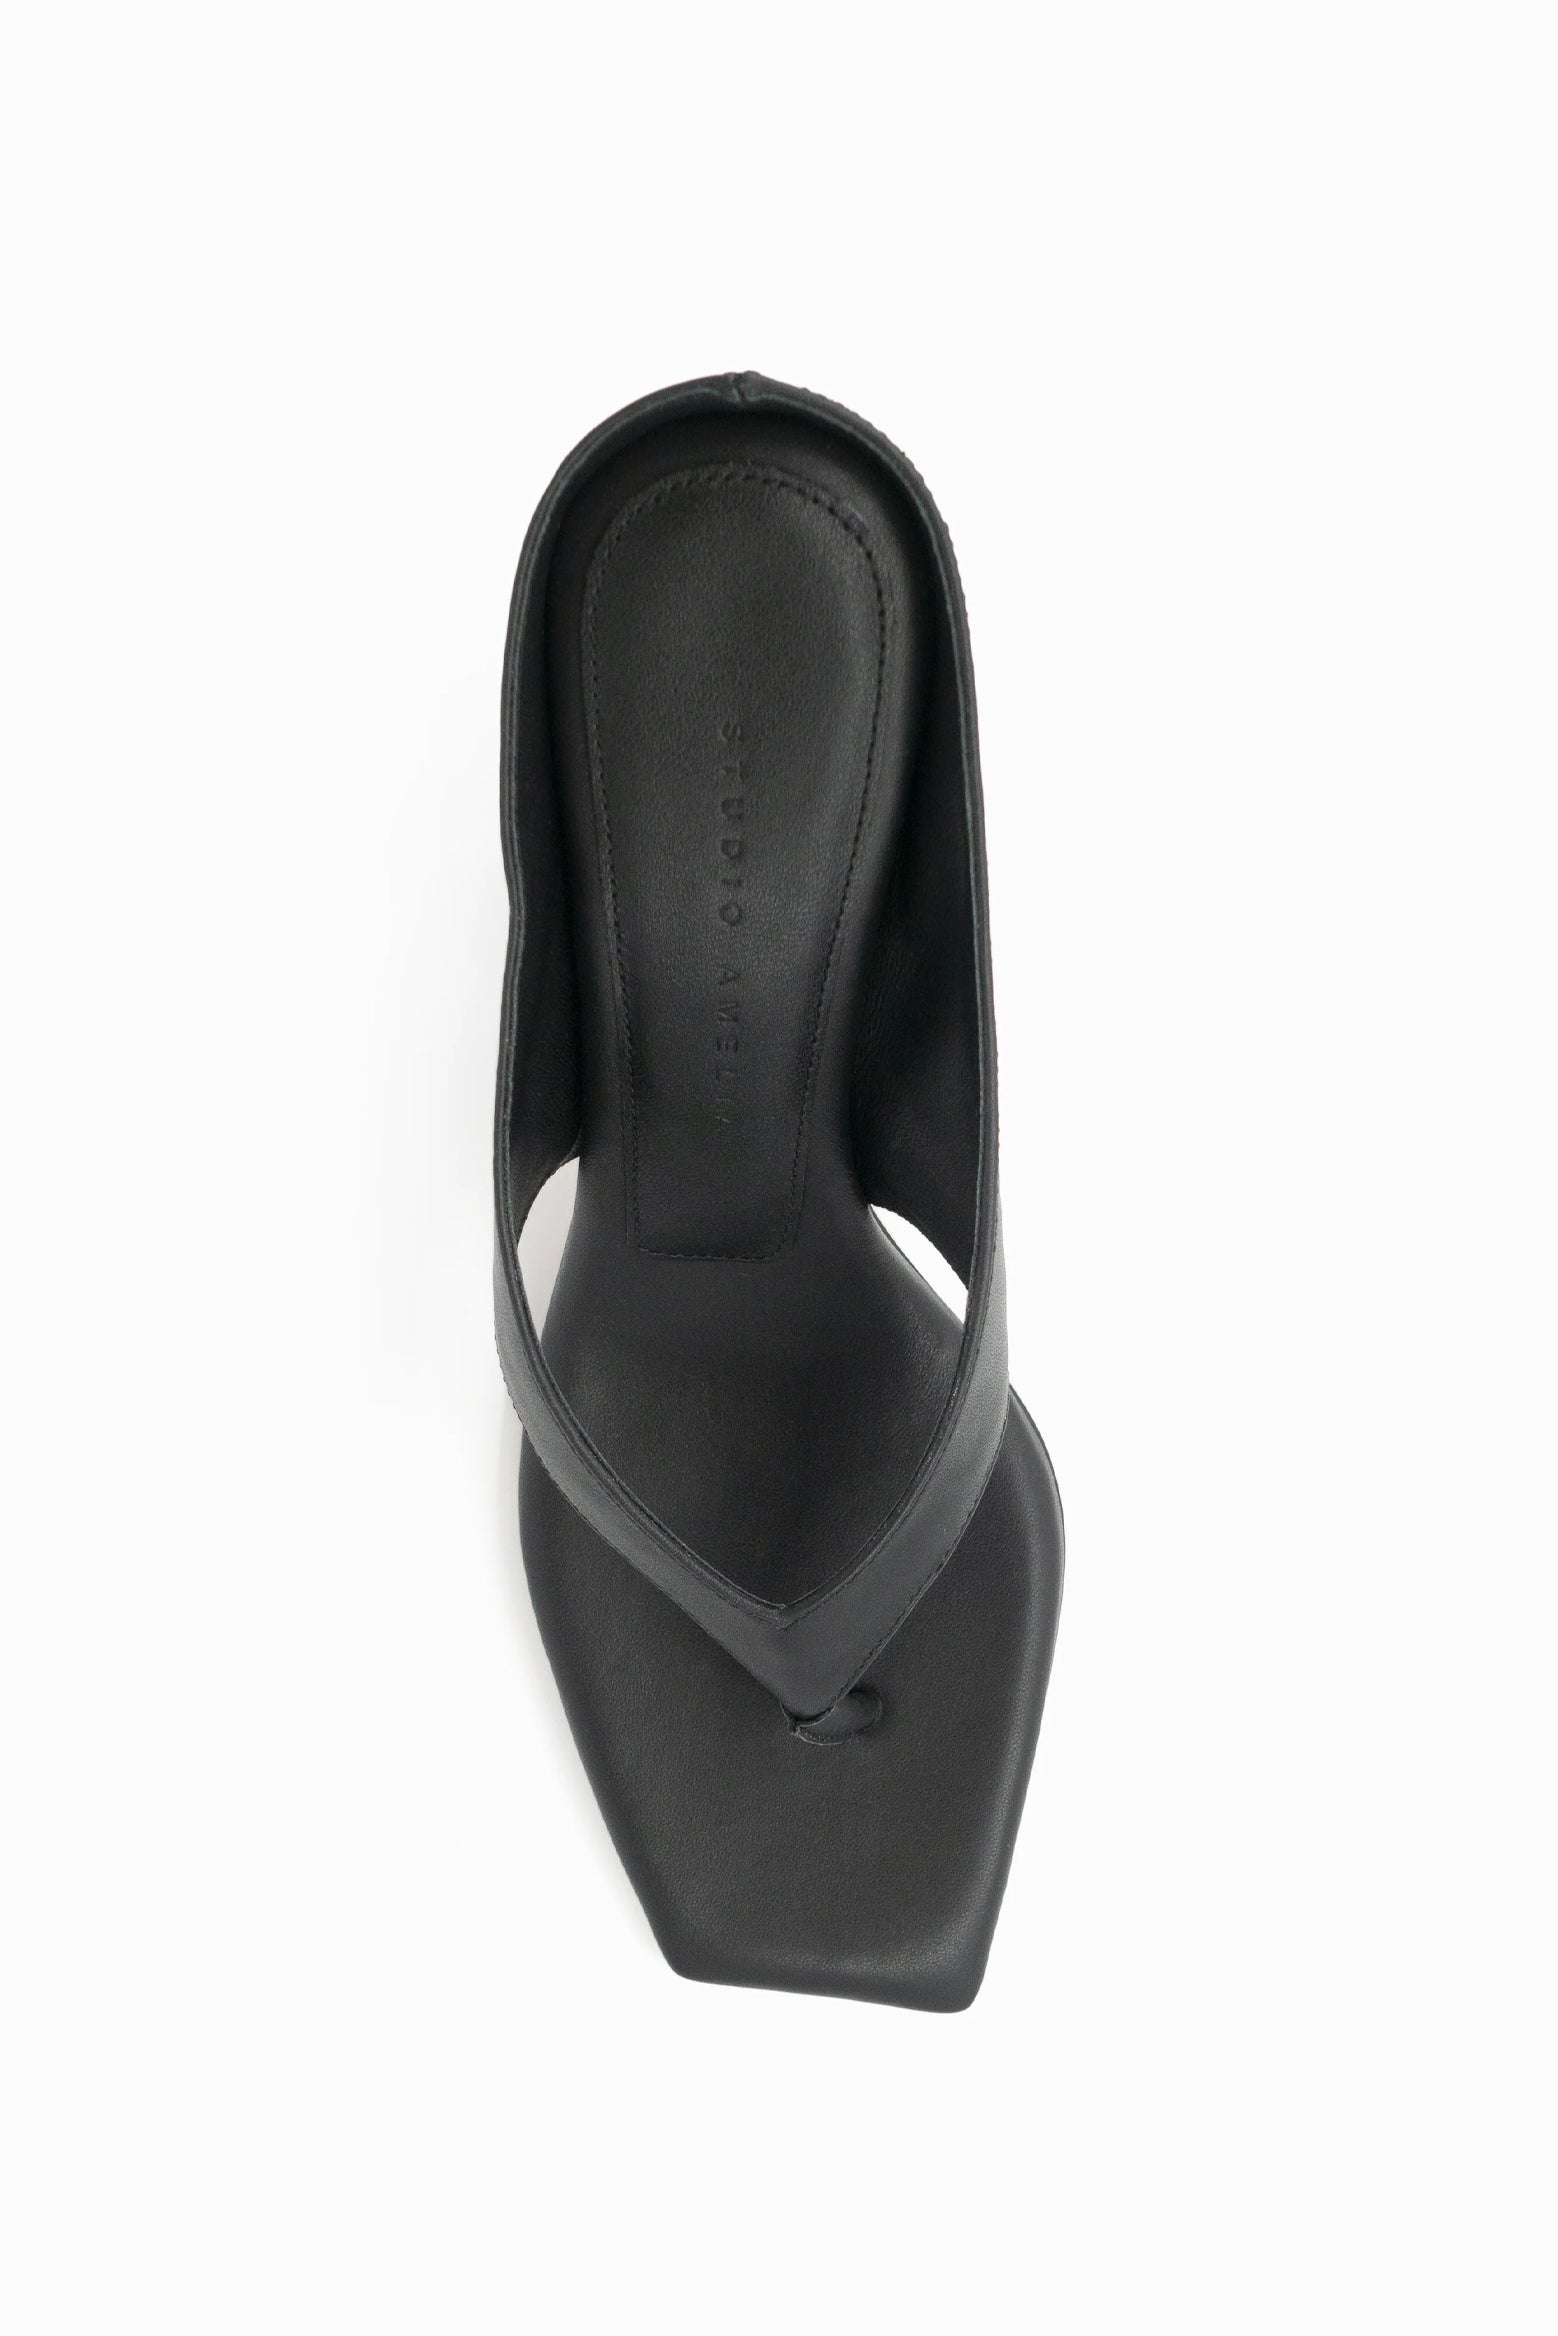 Studio Amelia Angela 90 Heel in Black available at The New Trend Australia.